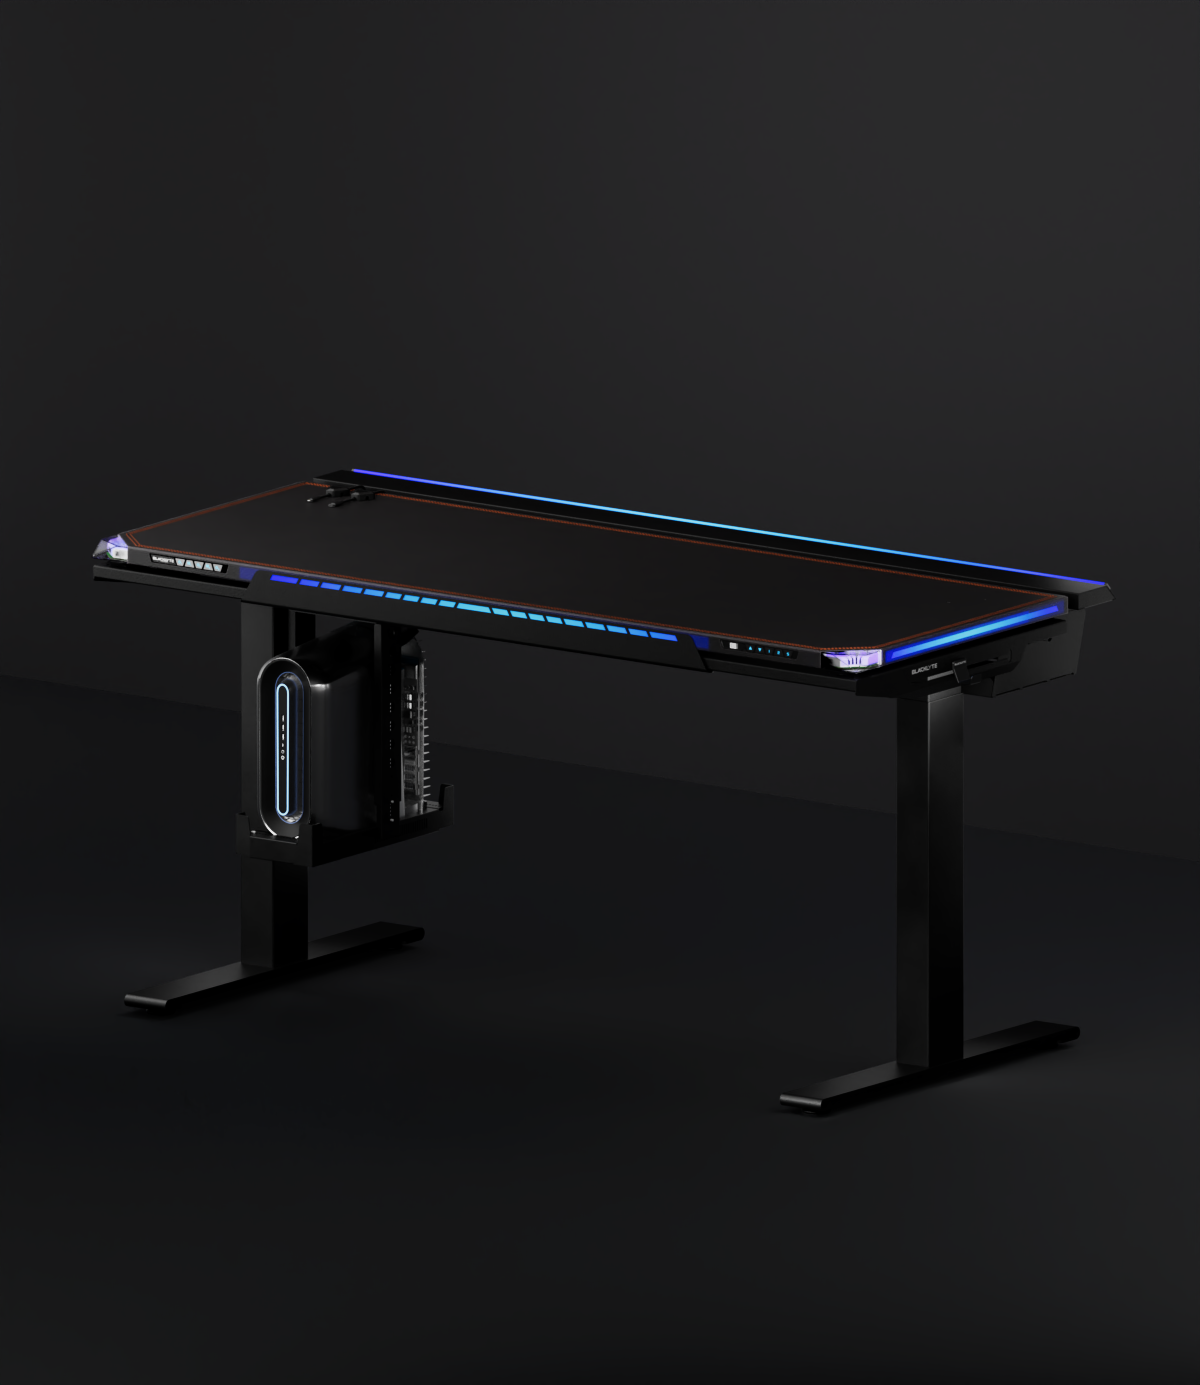 OPLITE Tilt Gaming Desk (Noir) - Meuble ordinateur - Garantie 3